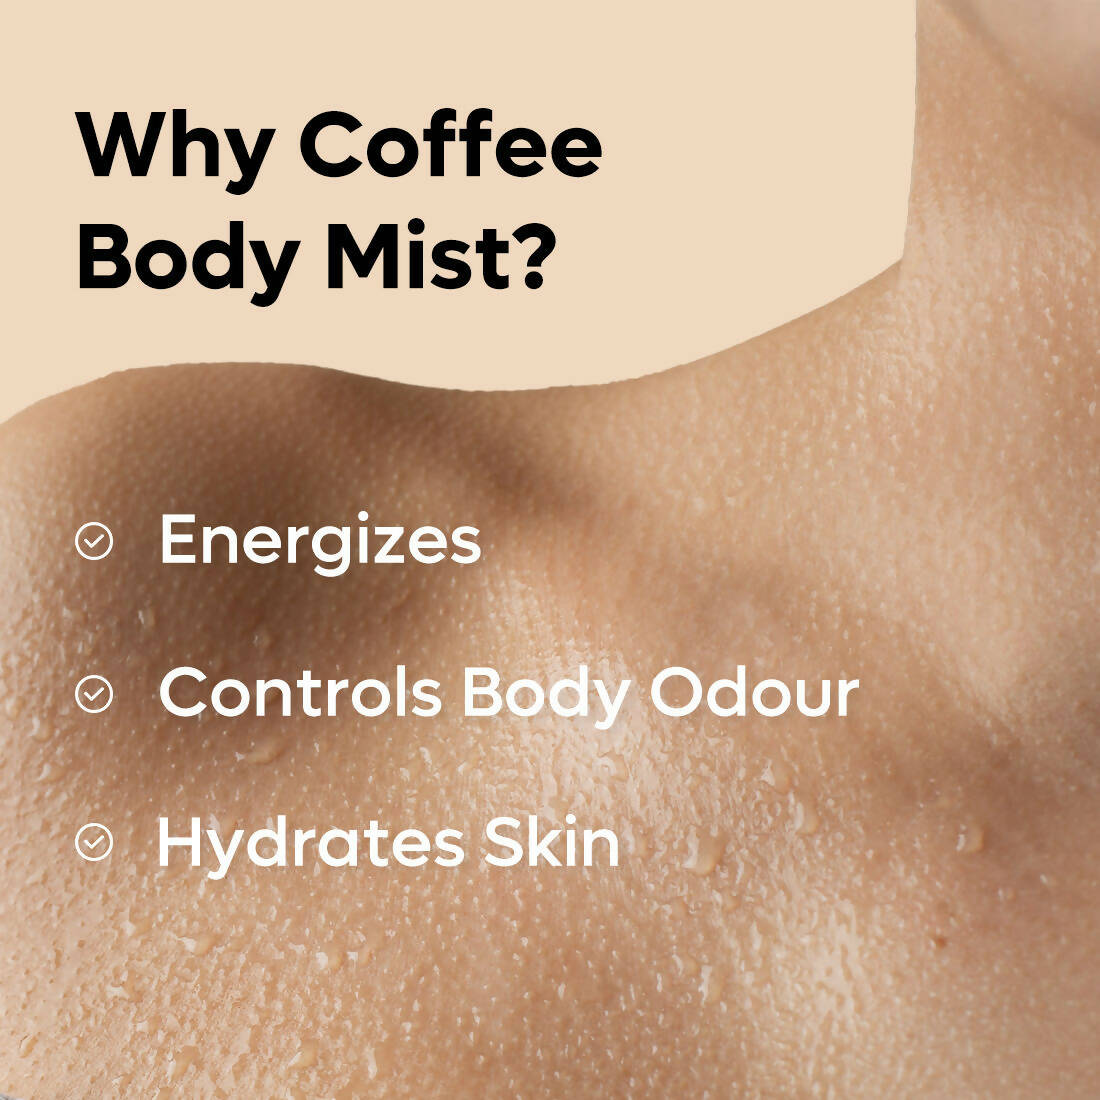 mCaffeine Cherry Affair Energizing Coffee Body Mist